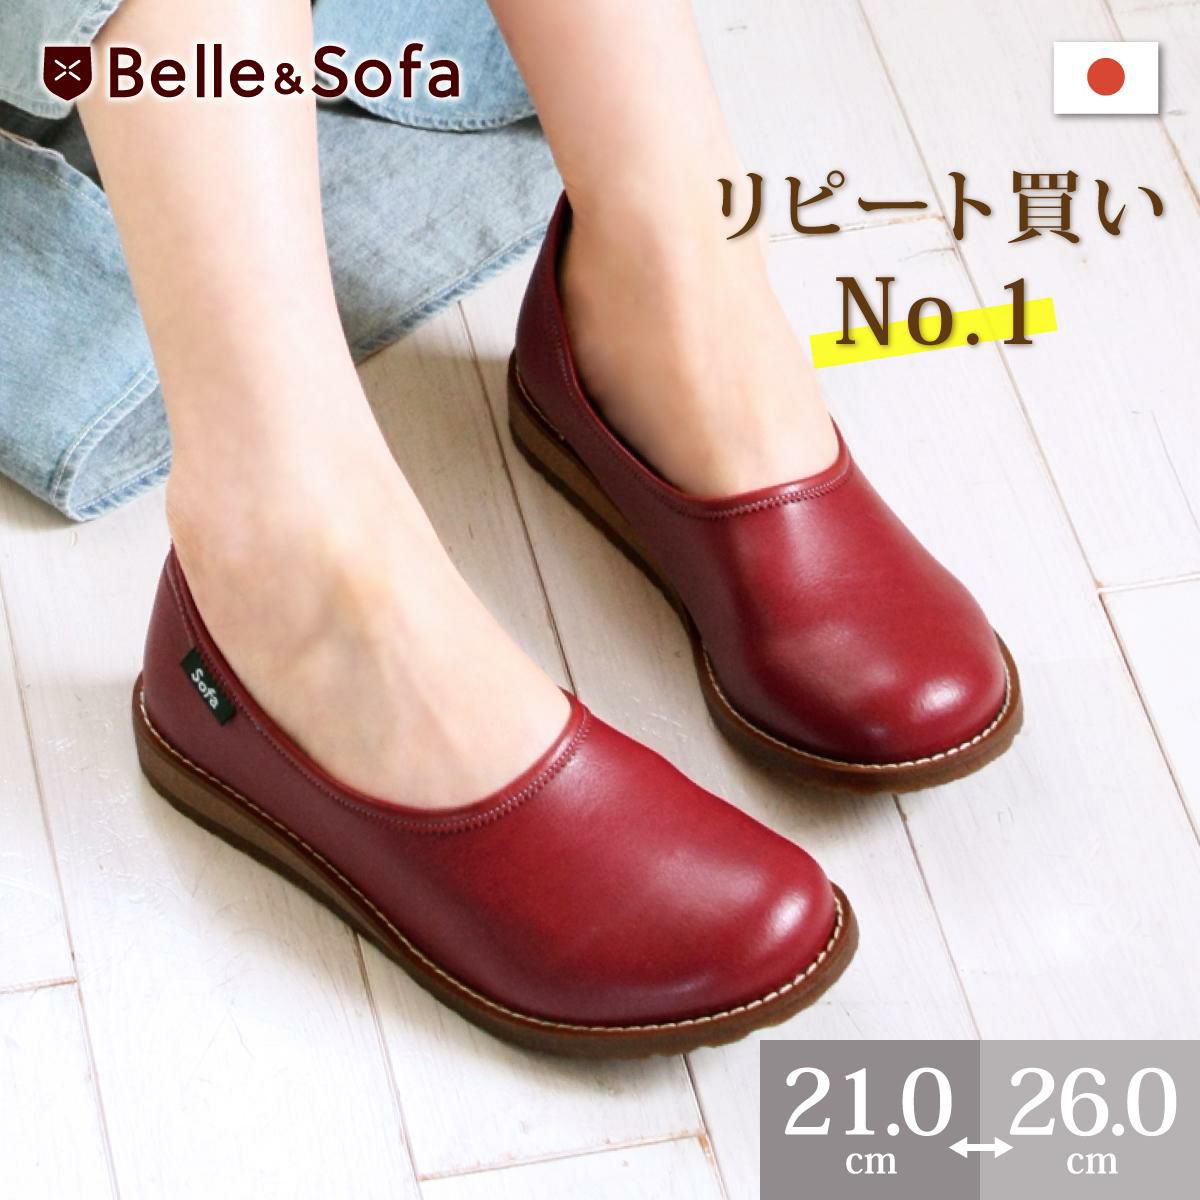 SOFA・GARDN | やさしい靴工房 Belle & Sofa